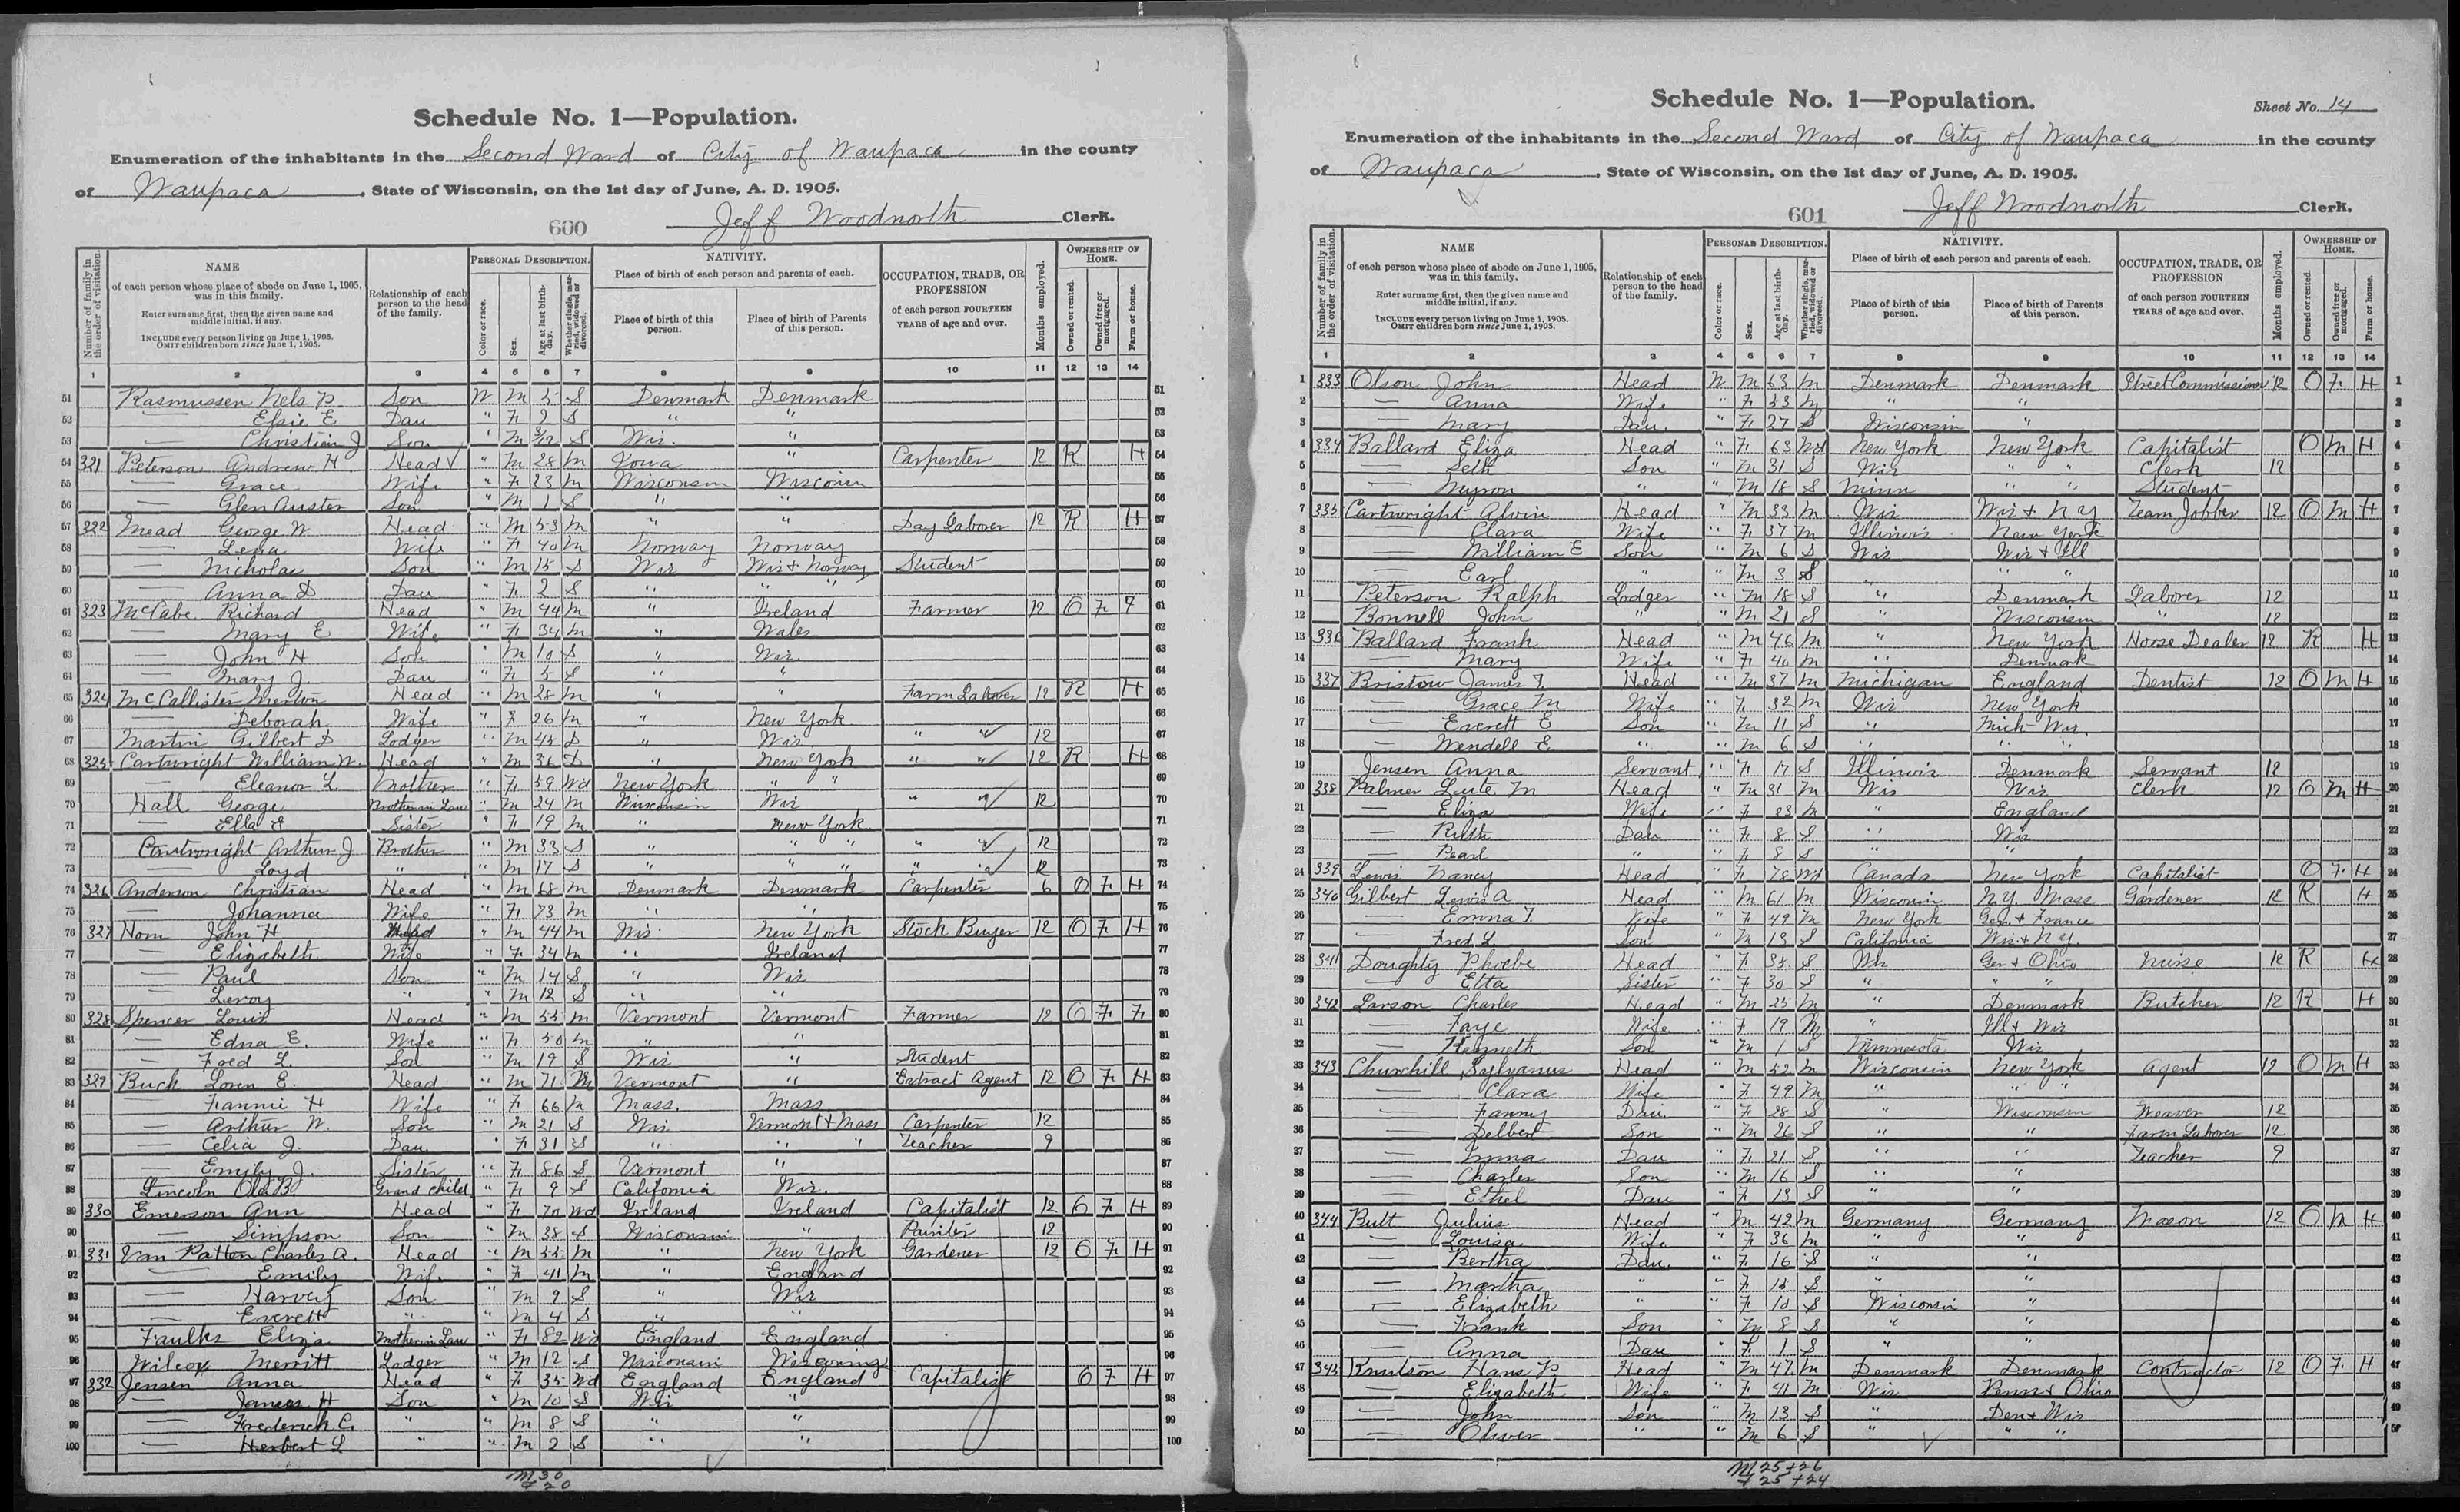 1905 US census - Waupaca, Waupaca, Wisconsin - Eleanor Cartwright, widow and children